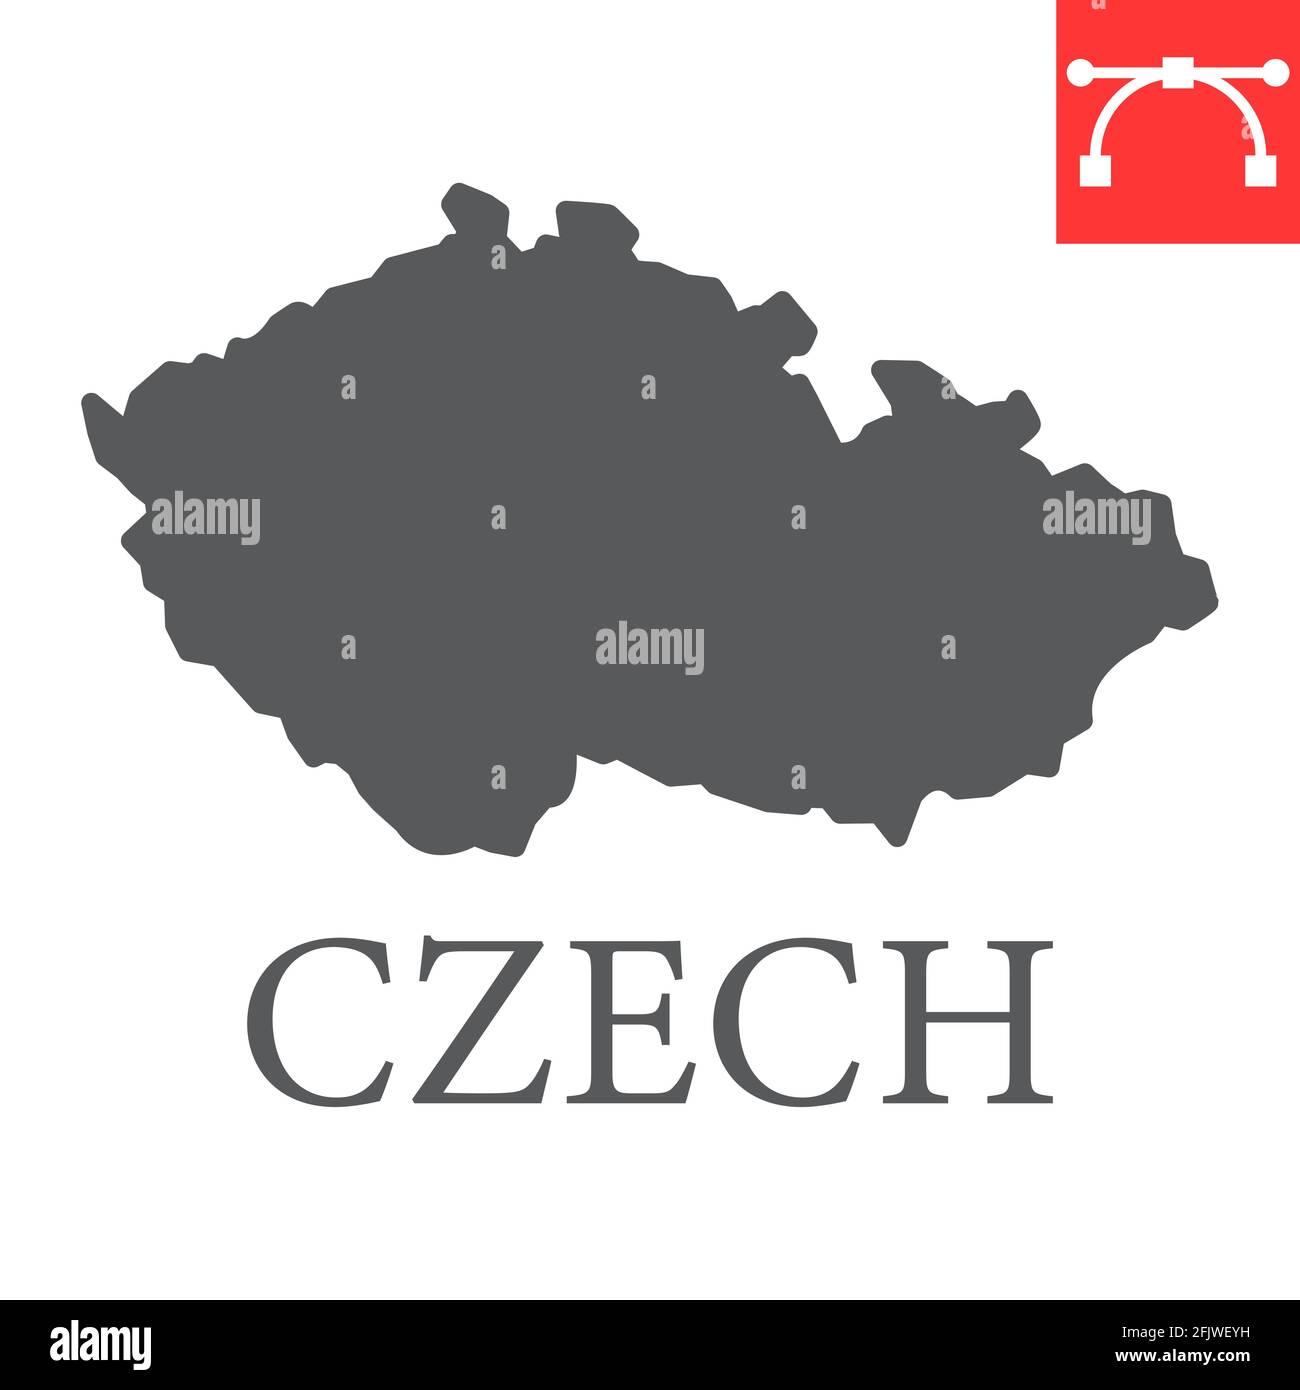 Map of Czech Republic glyph icon Stock Vector